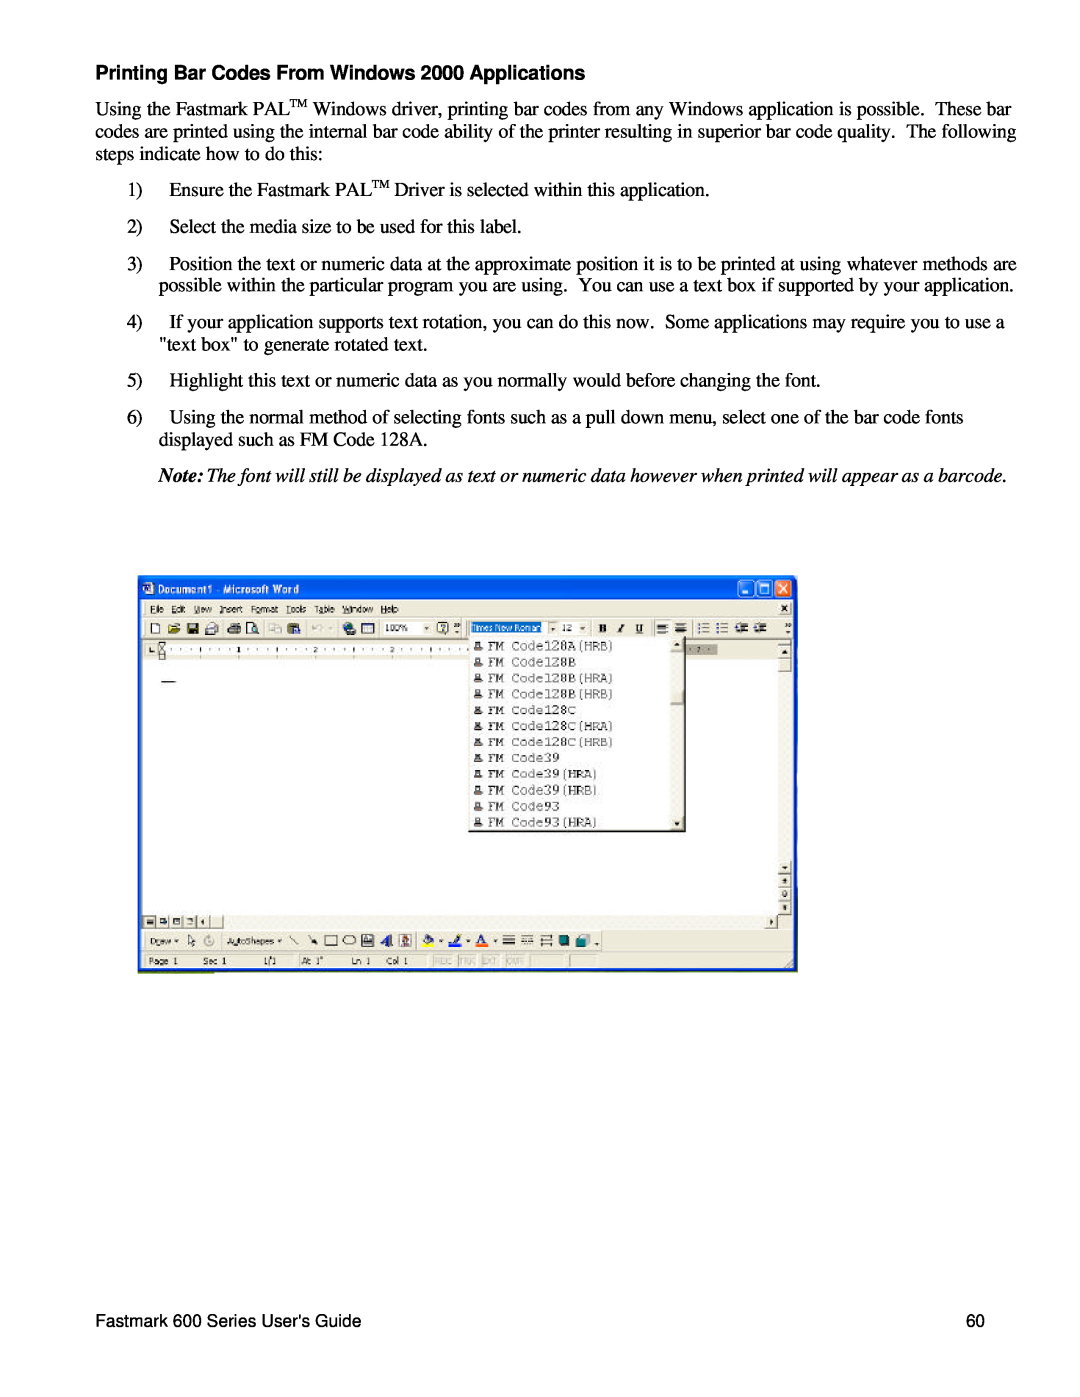 AMT Datasouth 600 manual Printing Bar Codes From Windows 2000 Applications 